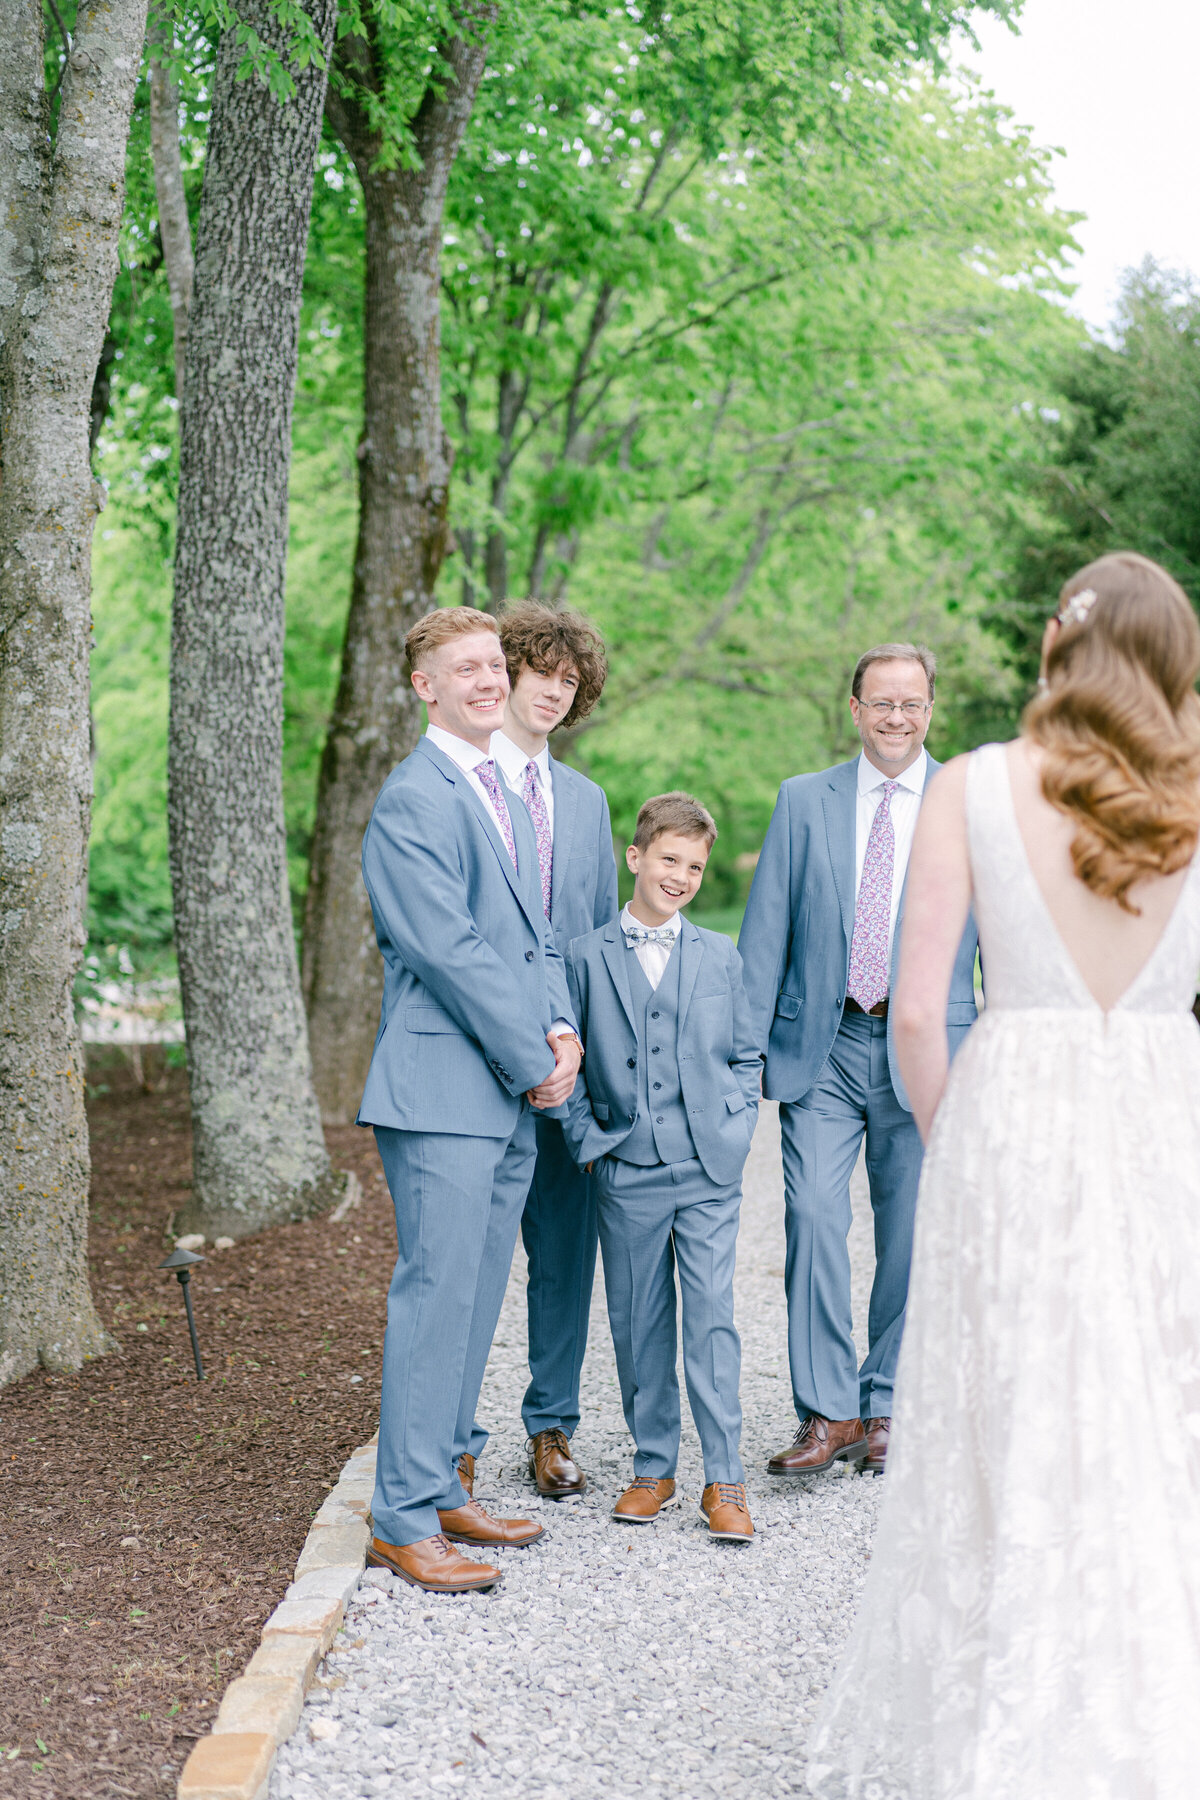 Ava-Vienneau-Nashville-Wedding-Photographer-Southall-Meadows-133